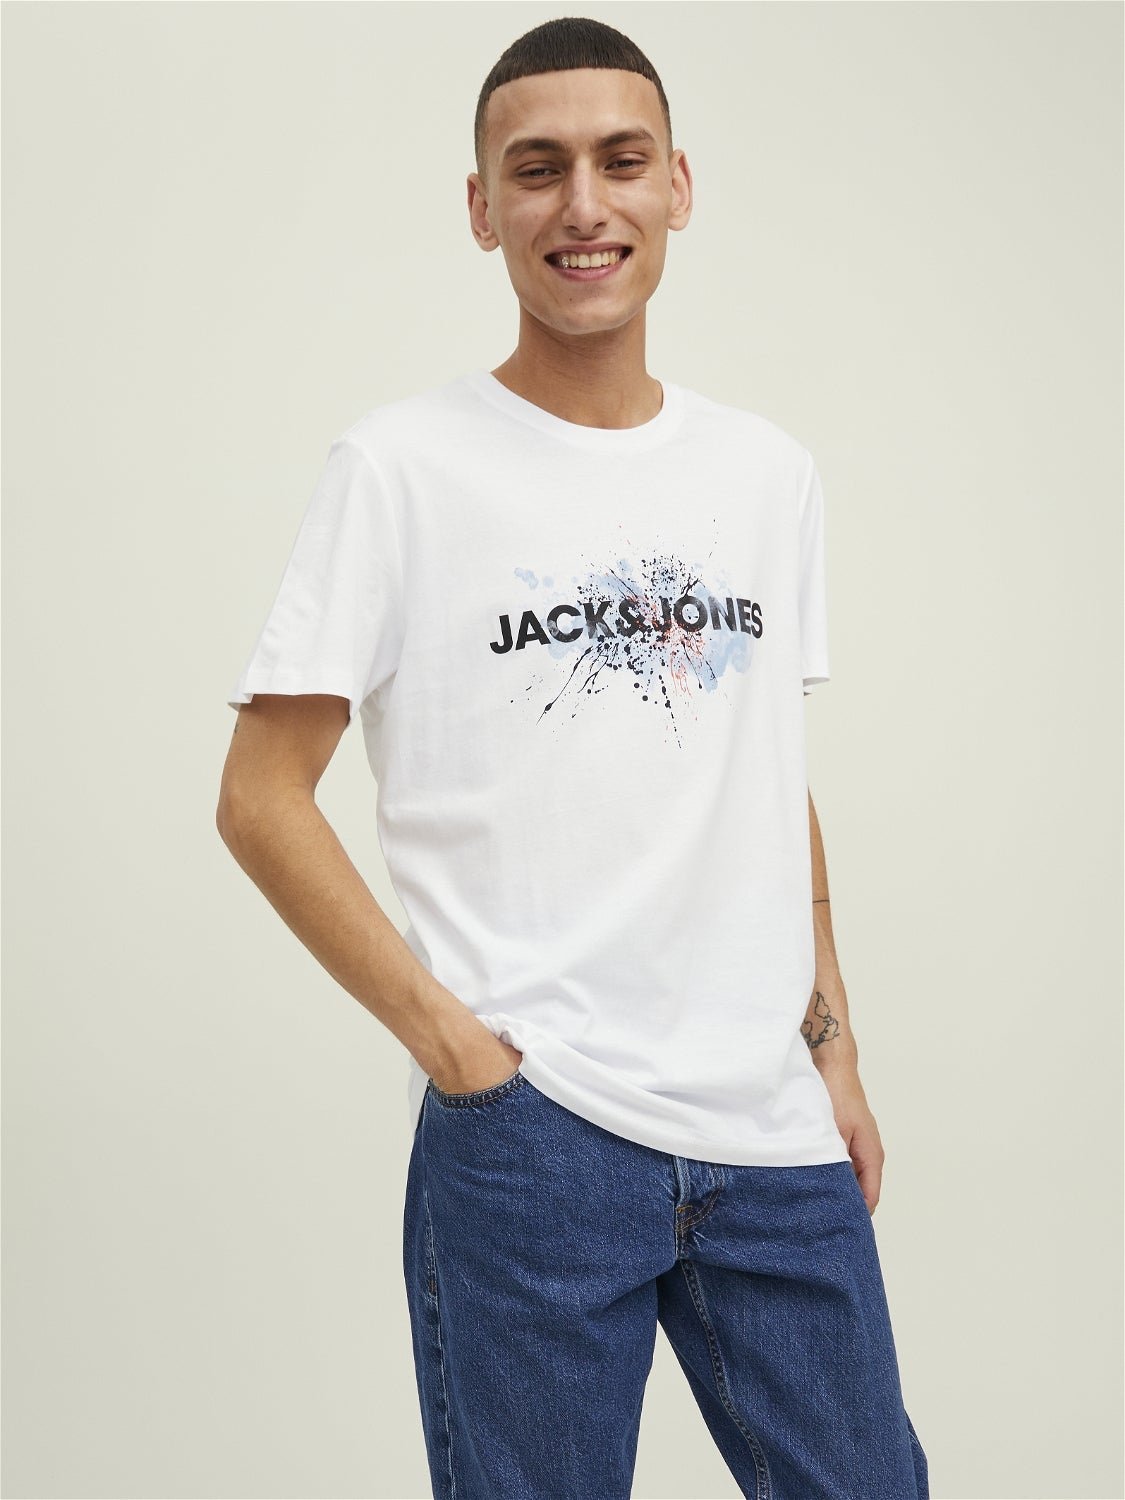 discount 54% MEN FASHION Shirts & T-shirts Basic Pink XXL Jack & Jones T-shirt 